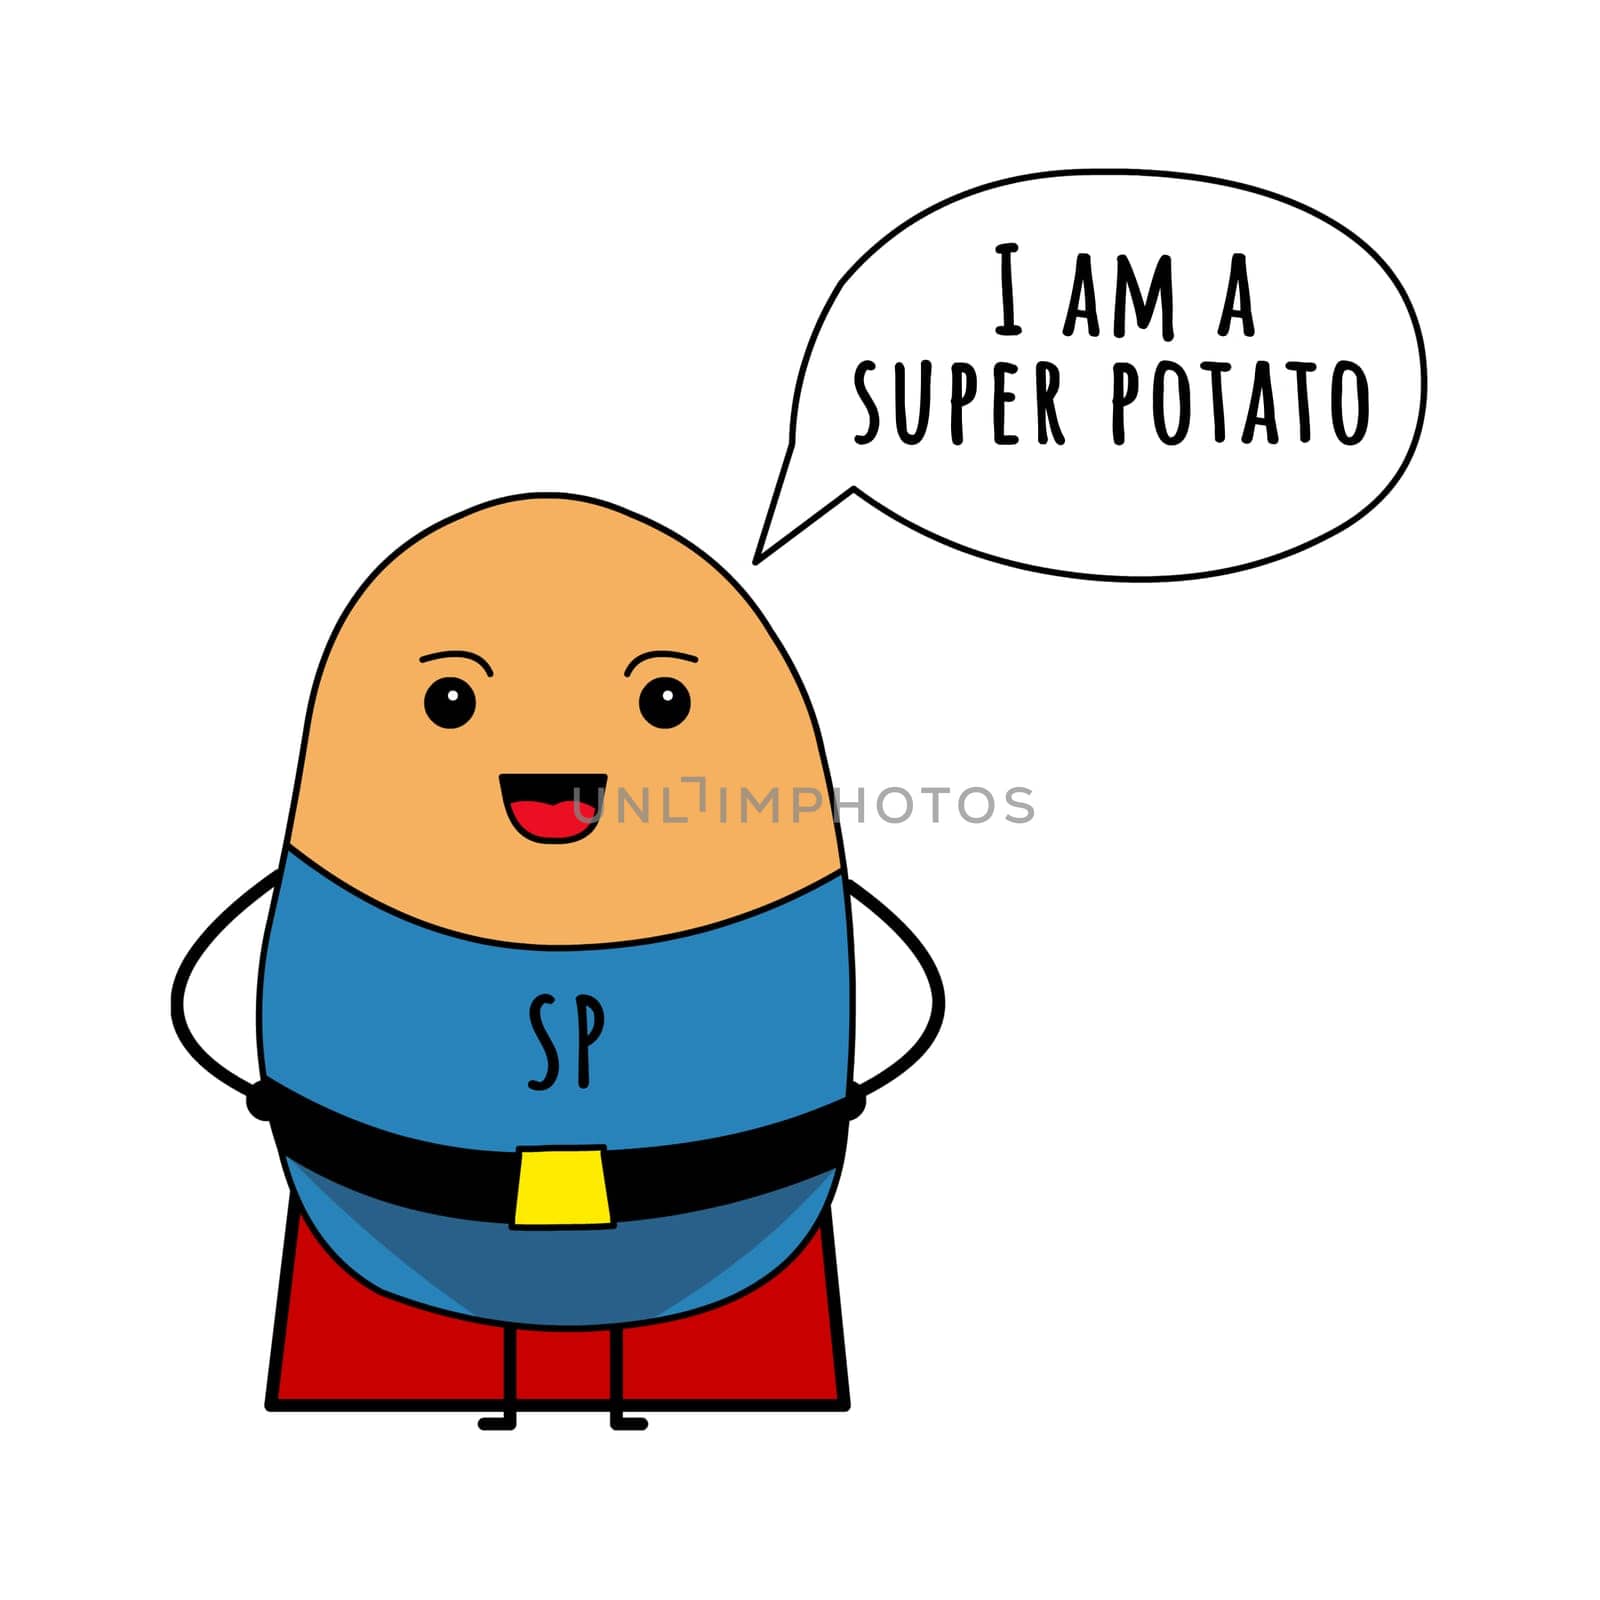 A potato dressed up as a super hero with the speech bubble "I am a super potato".